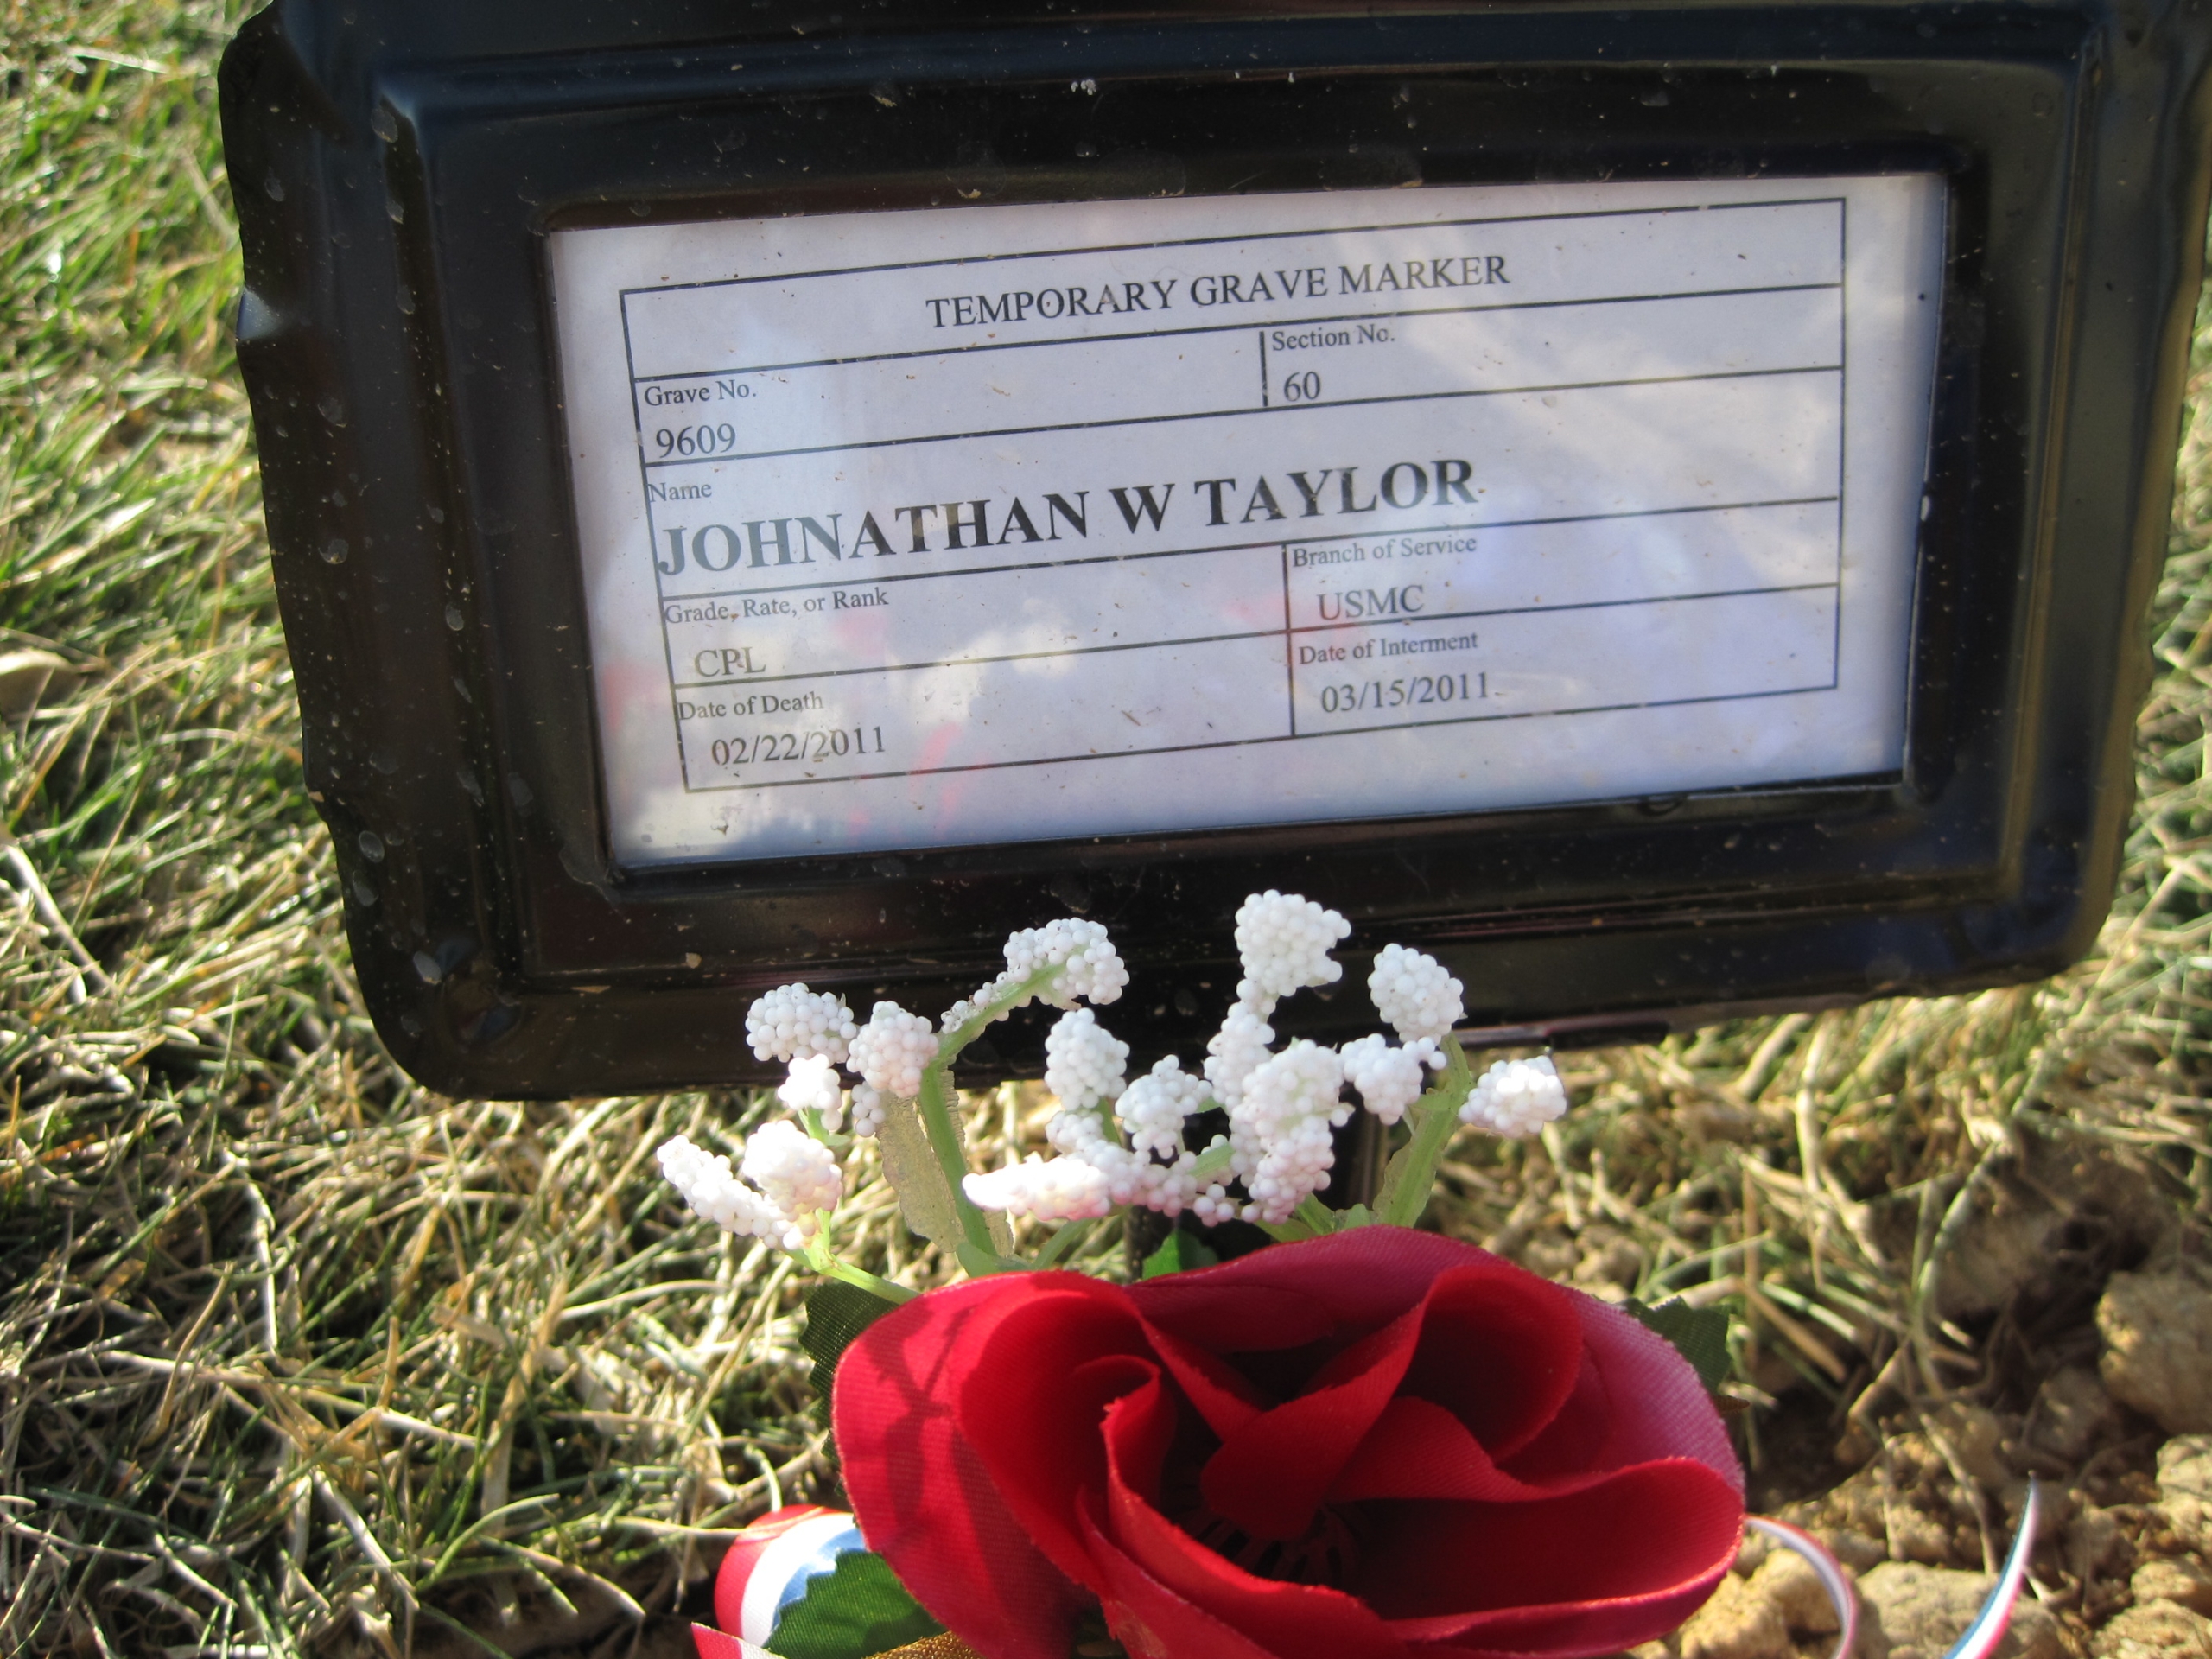 jwtaylor-gravesite-photo-by-eileen-horan-february-2011-003